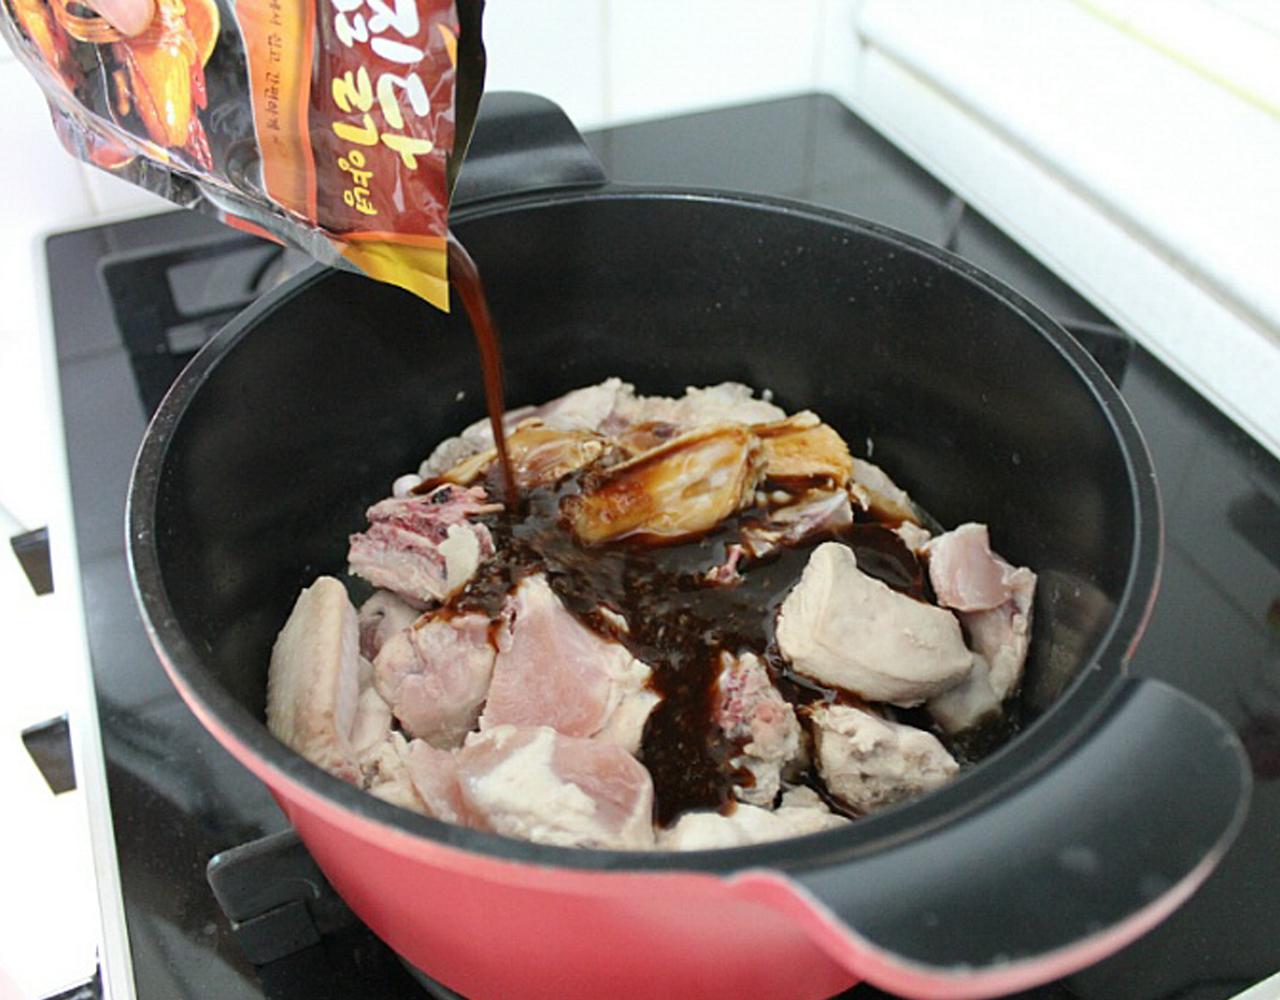 Andong Chicken Seasoning (210g)